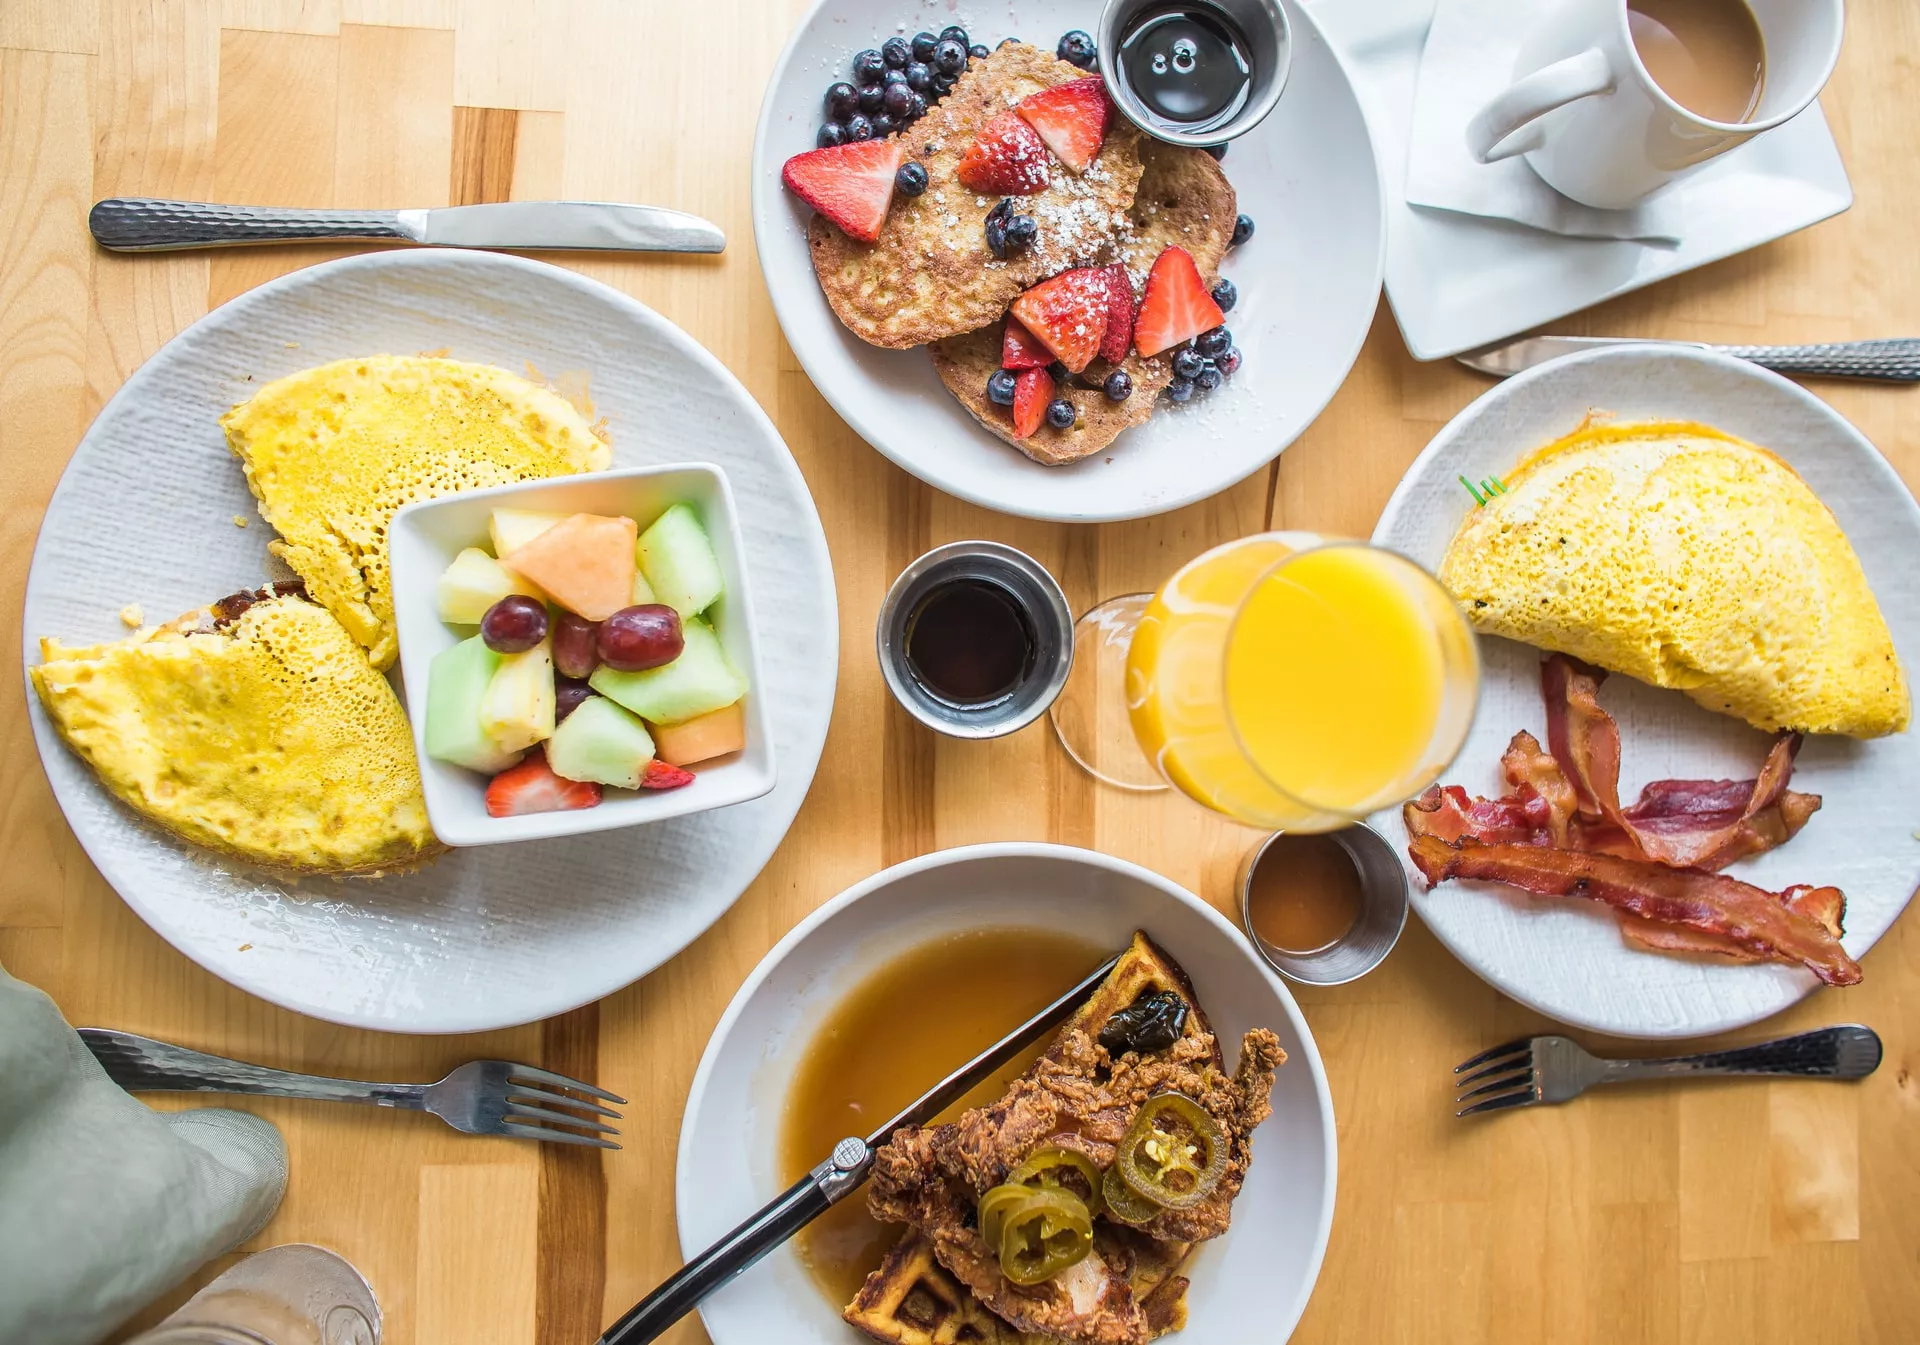 Creative Ways to Turn Leftovers into Breakfast